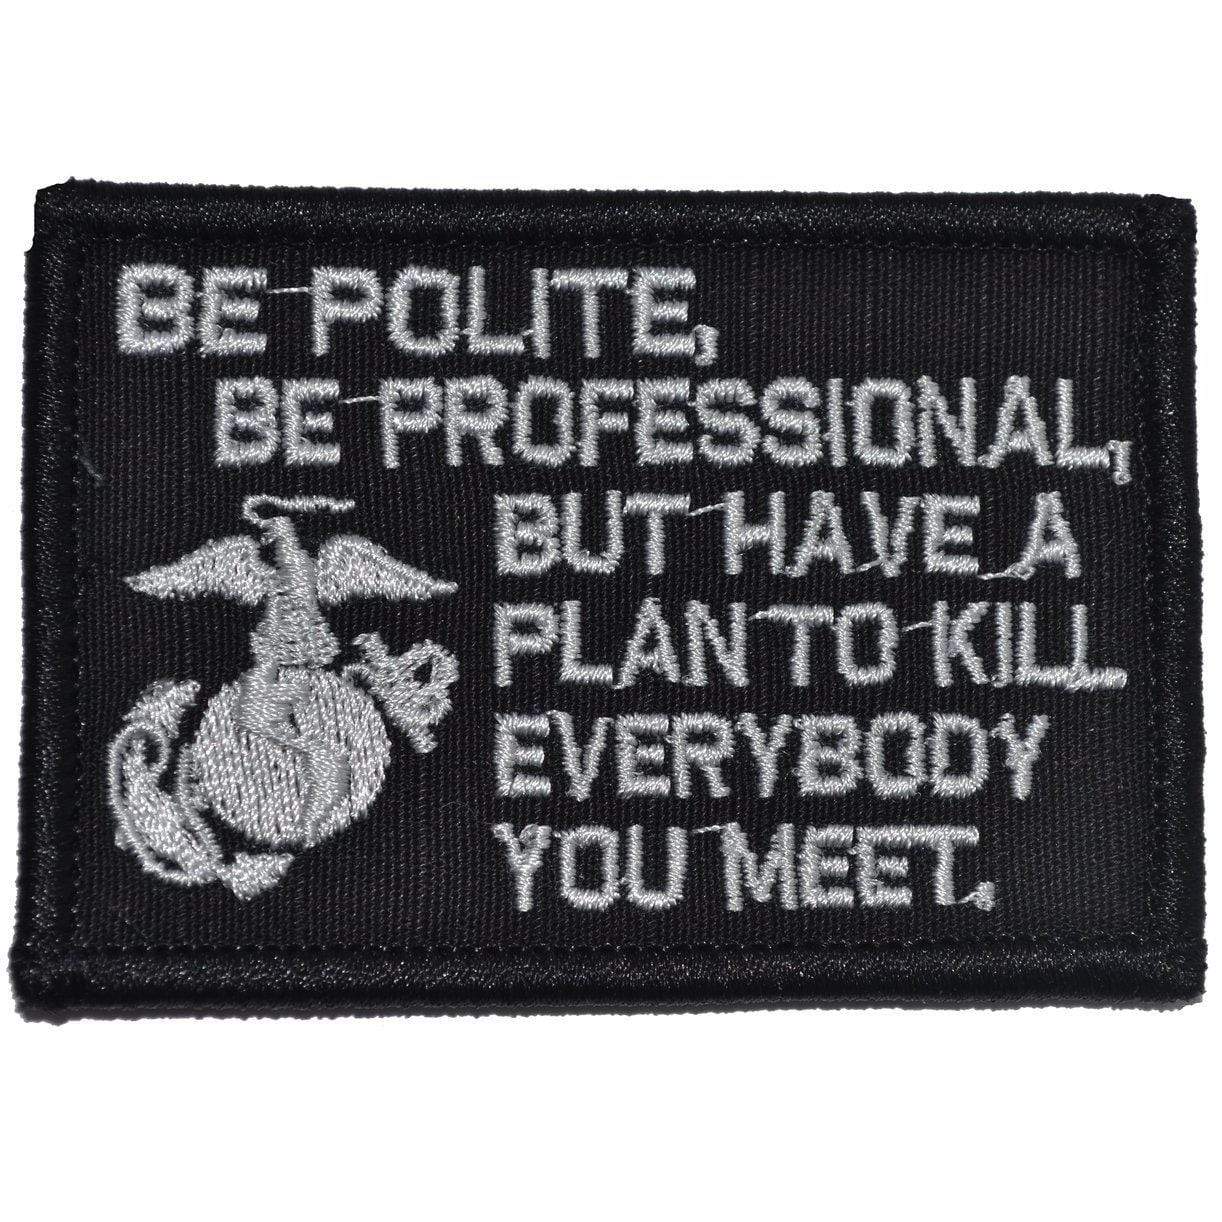 Tactical Gear Junkie Patches Black Be Polite, Be Professional USMC Mattis Quote - 2x3 Patch